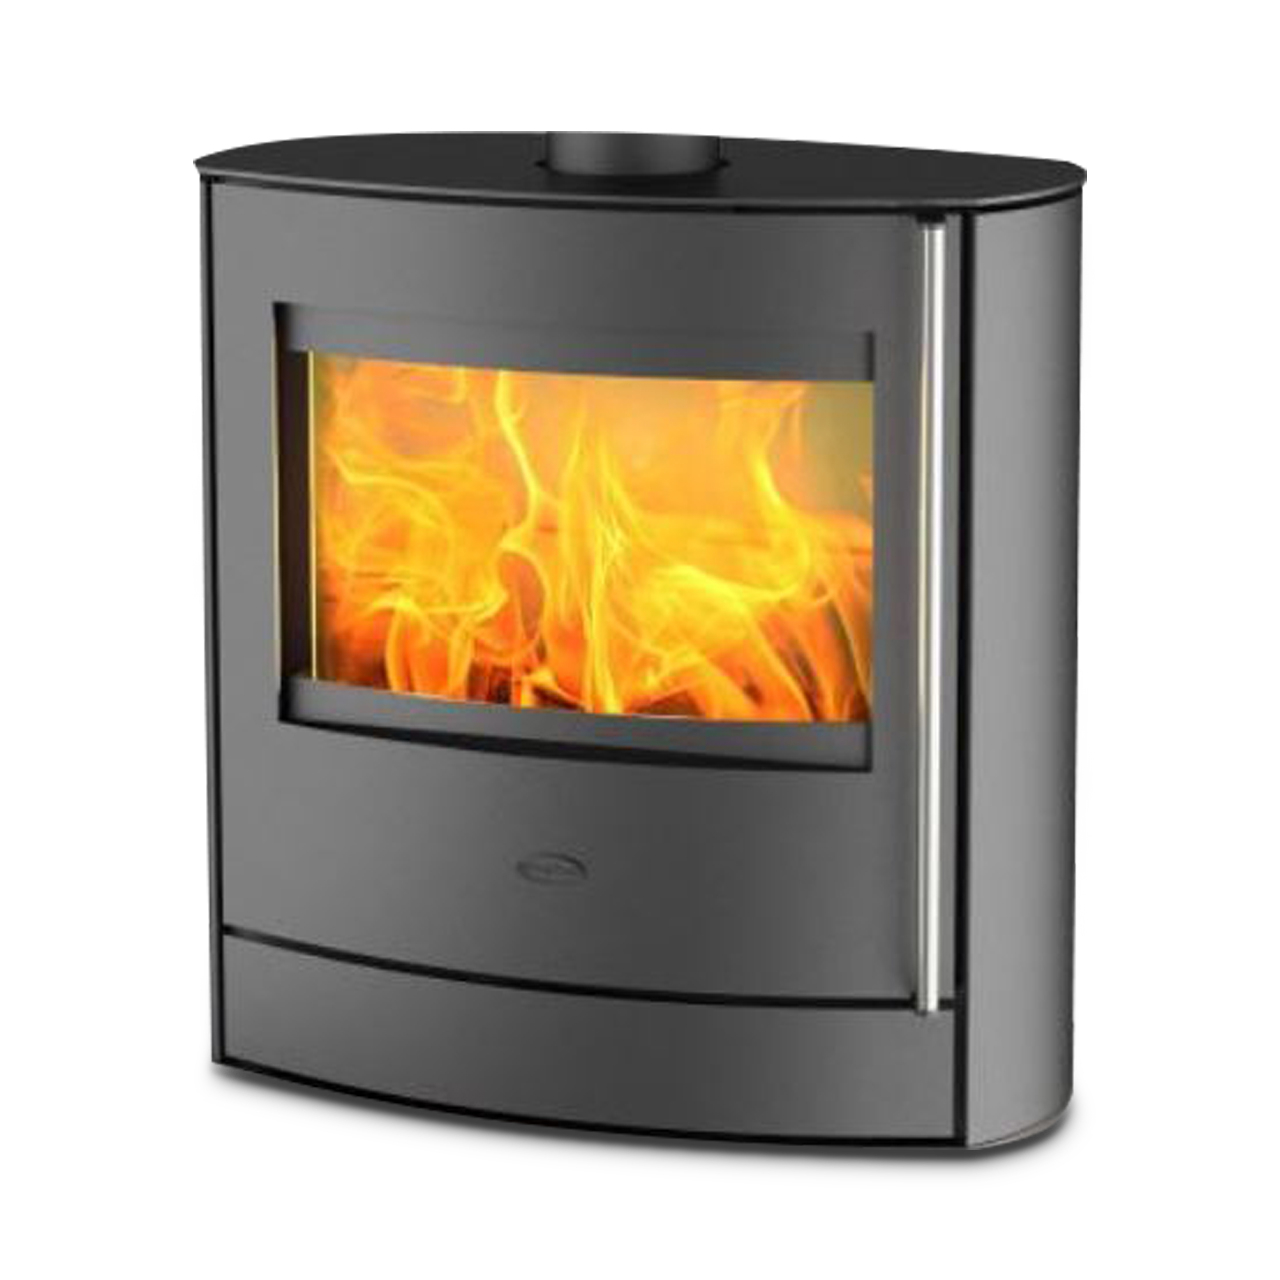 Where to Buy Gas Fireplace Inspirational Kaminofen Fireplace Adamis Stahl 7 Kw